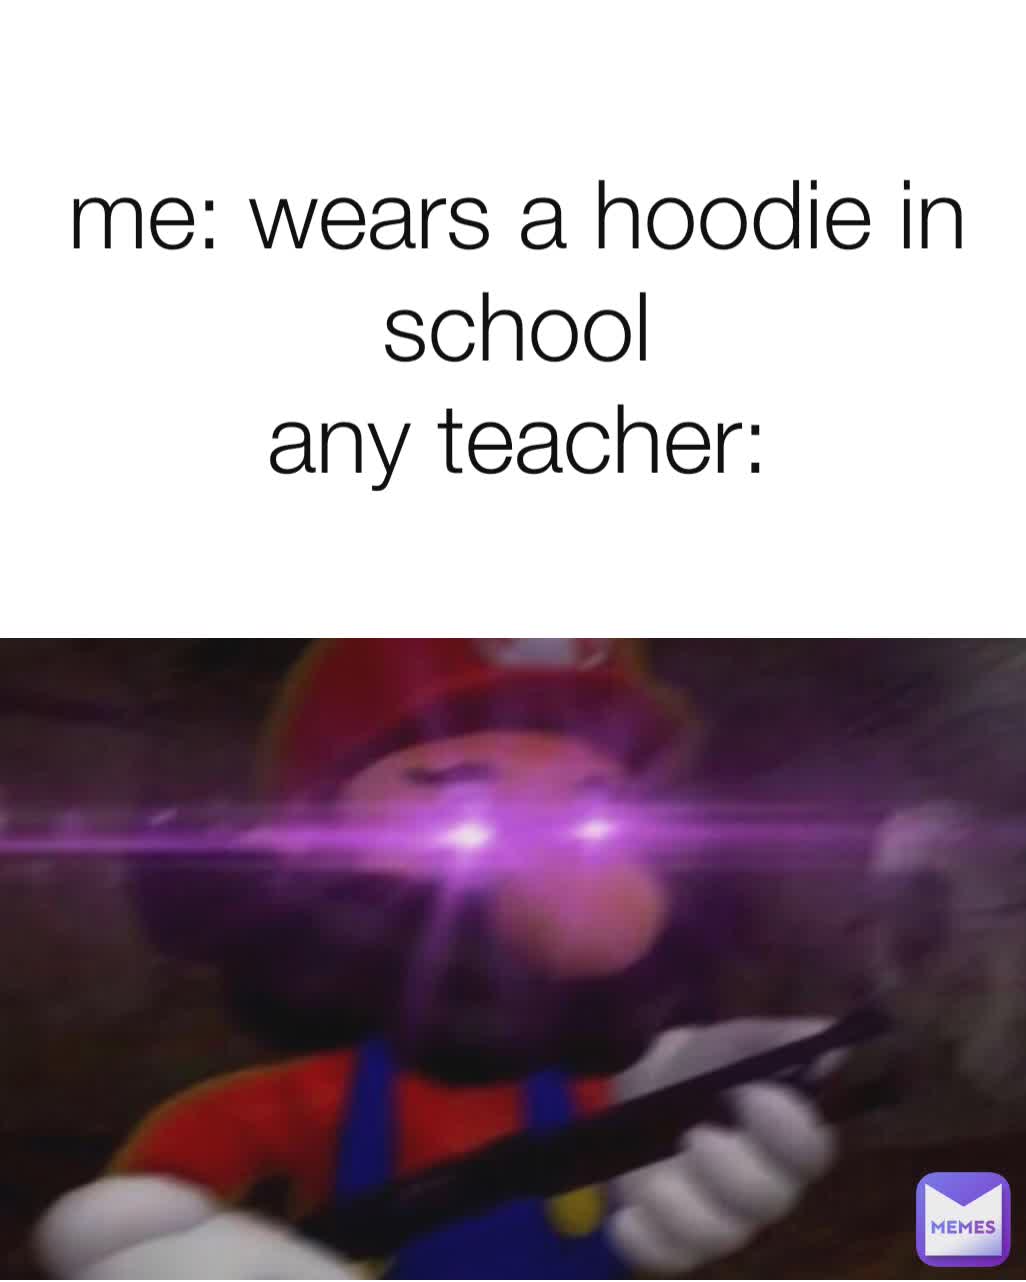 me: wears a hoodie in school
any teacher: